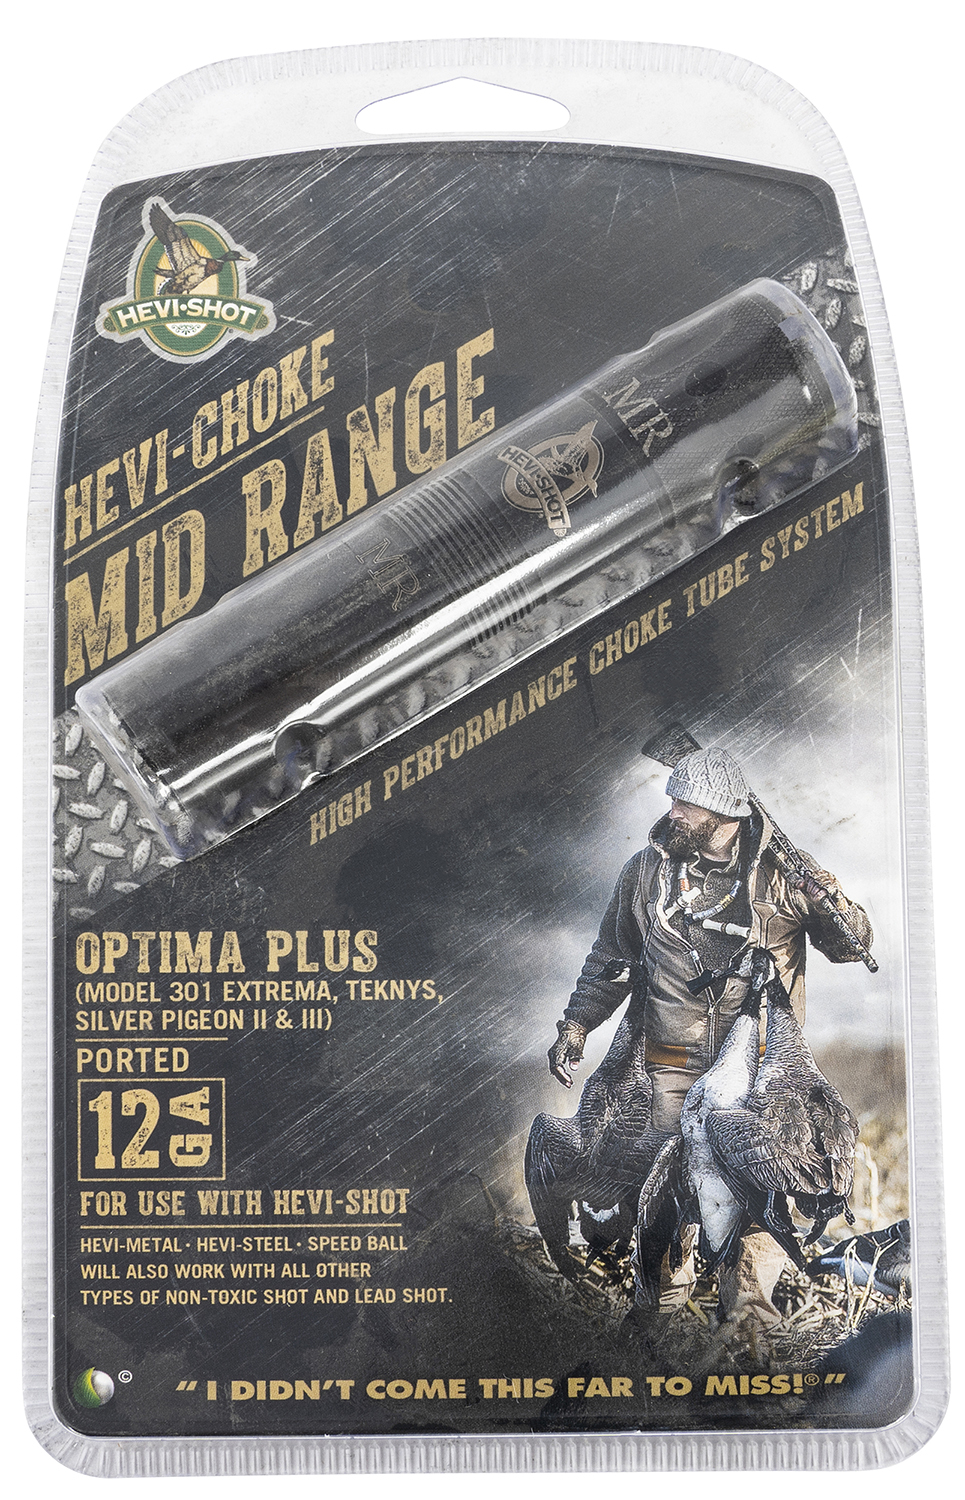 HEVI-Shot 550124 Hevi-Choke Waterfowl Beretta Optima Plus 12 Gauge Mid-Range 17-4 Stainless Steel Black (Ported)